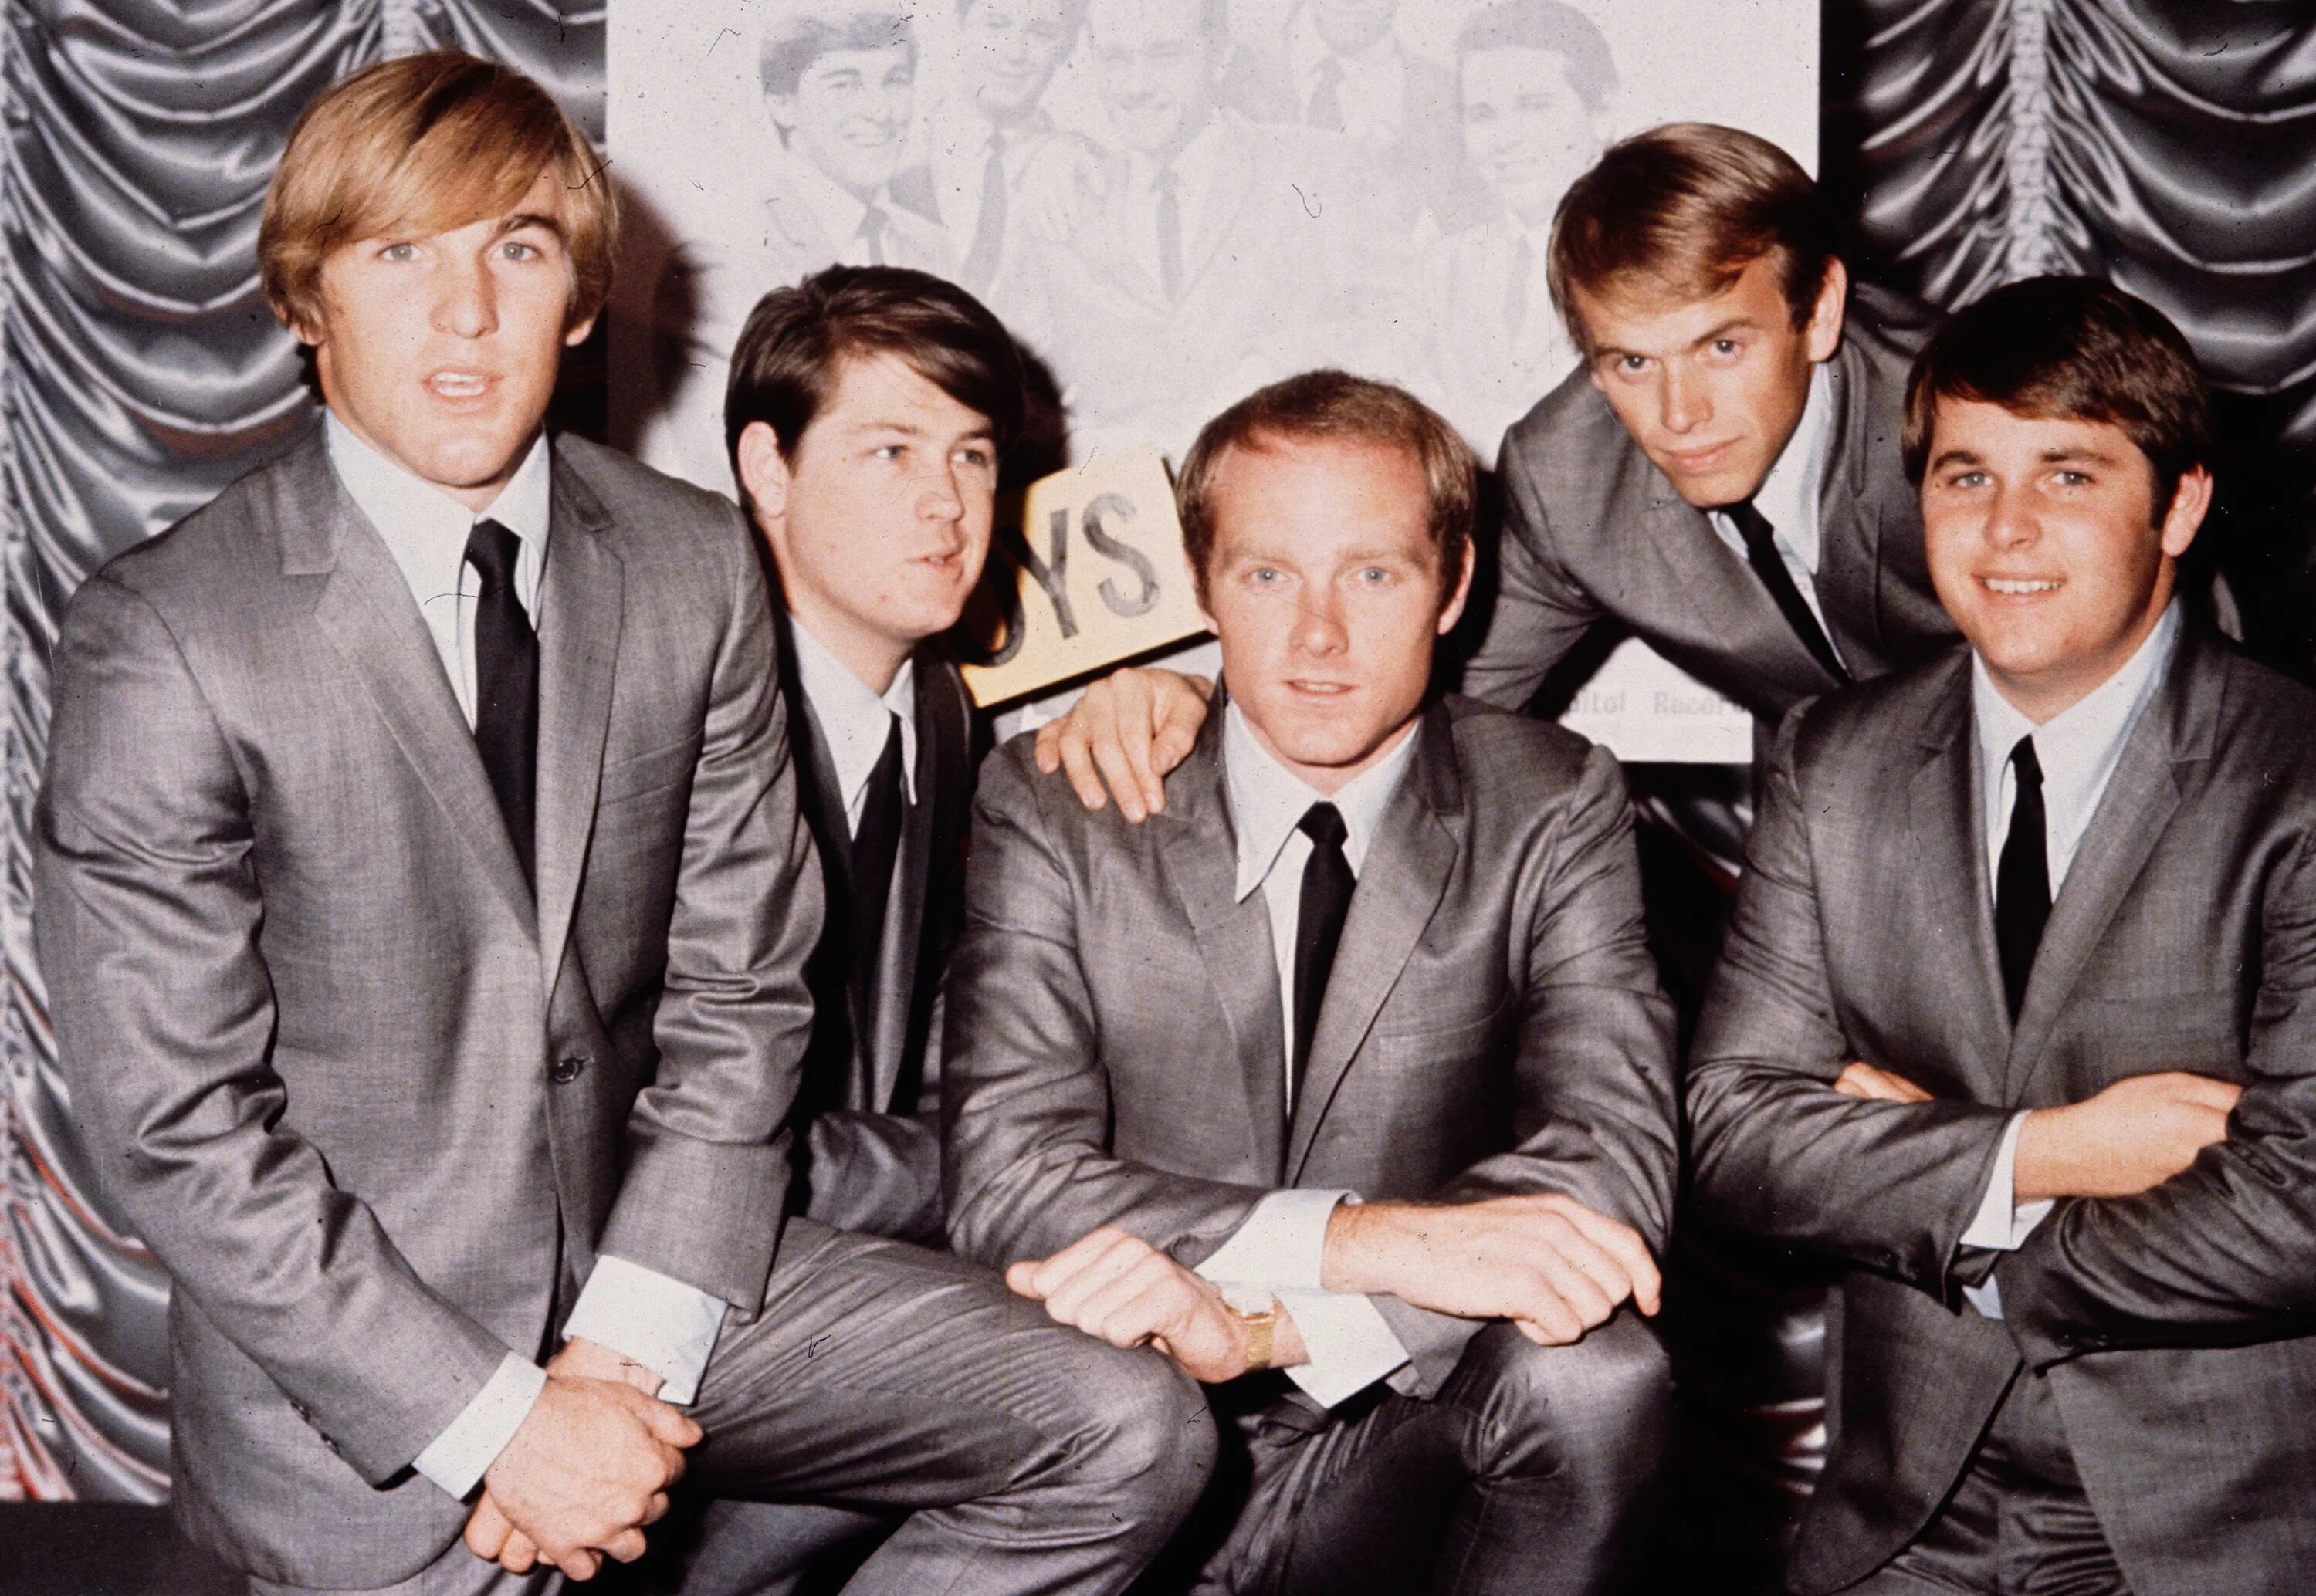 Группа без основ. Группа Бич Бойз. Бич Бойз фото группы. The Beach boys 1965. The Beach boys 1961.